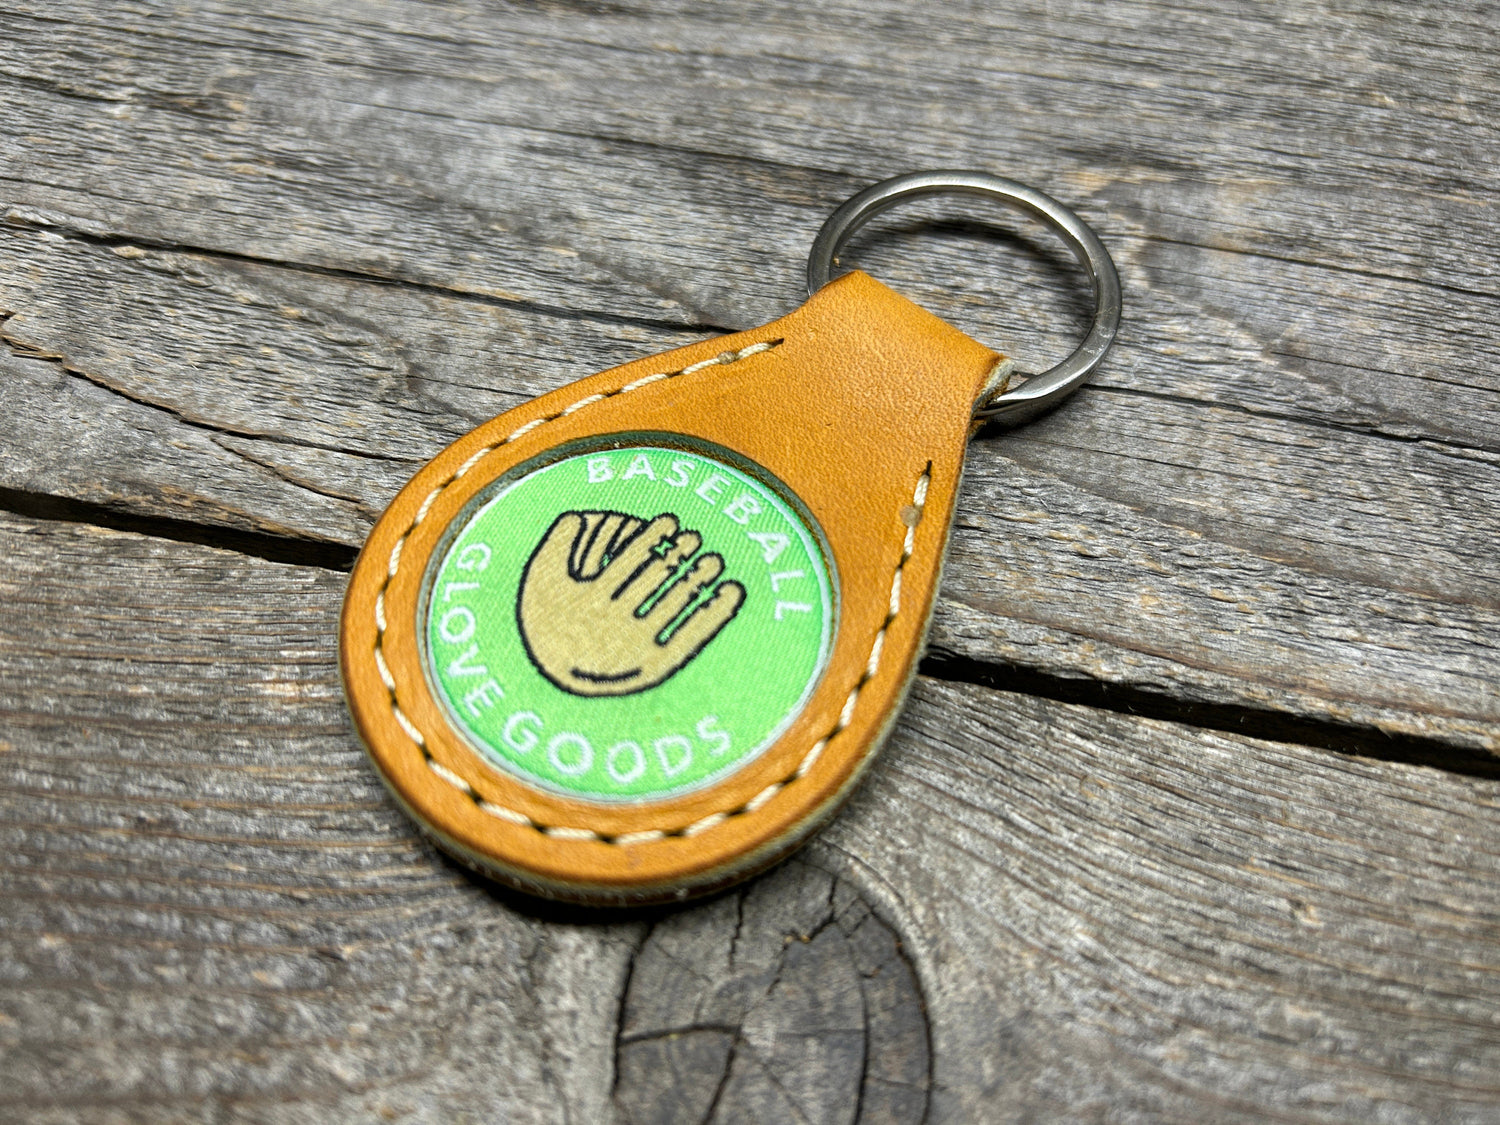 New Item! Baseball Glove Goods Baseball Glove Key Chain!